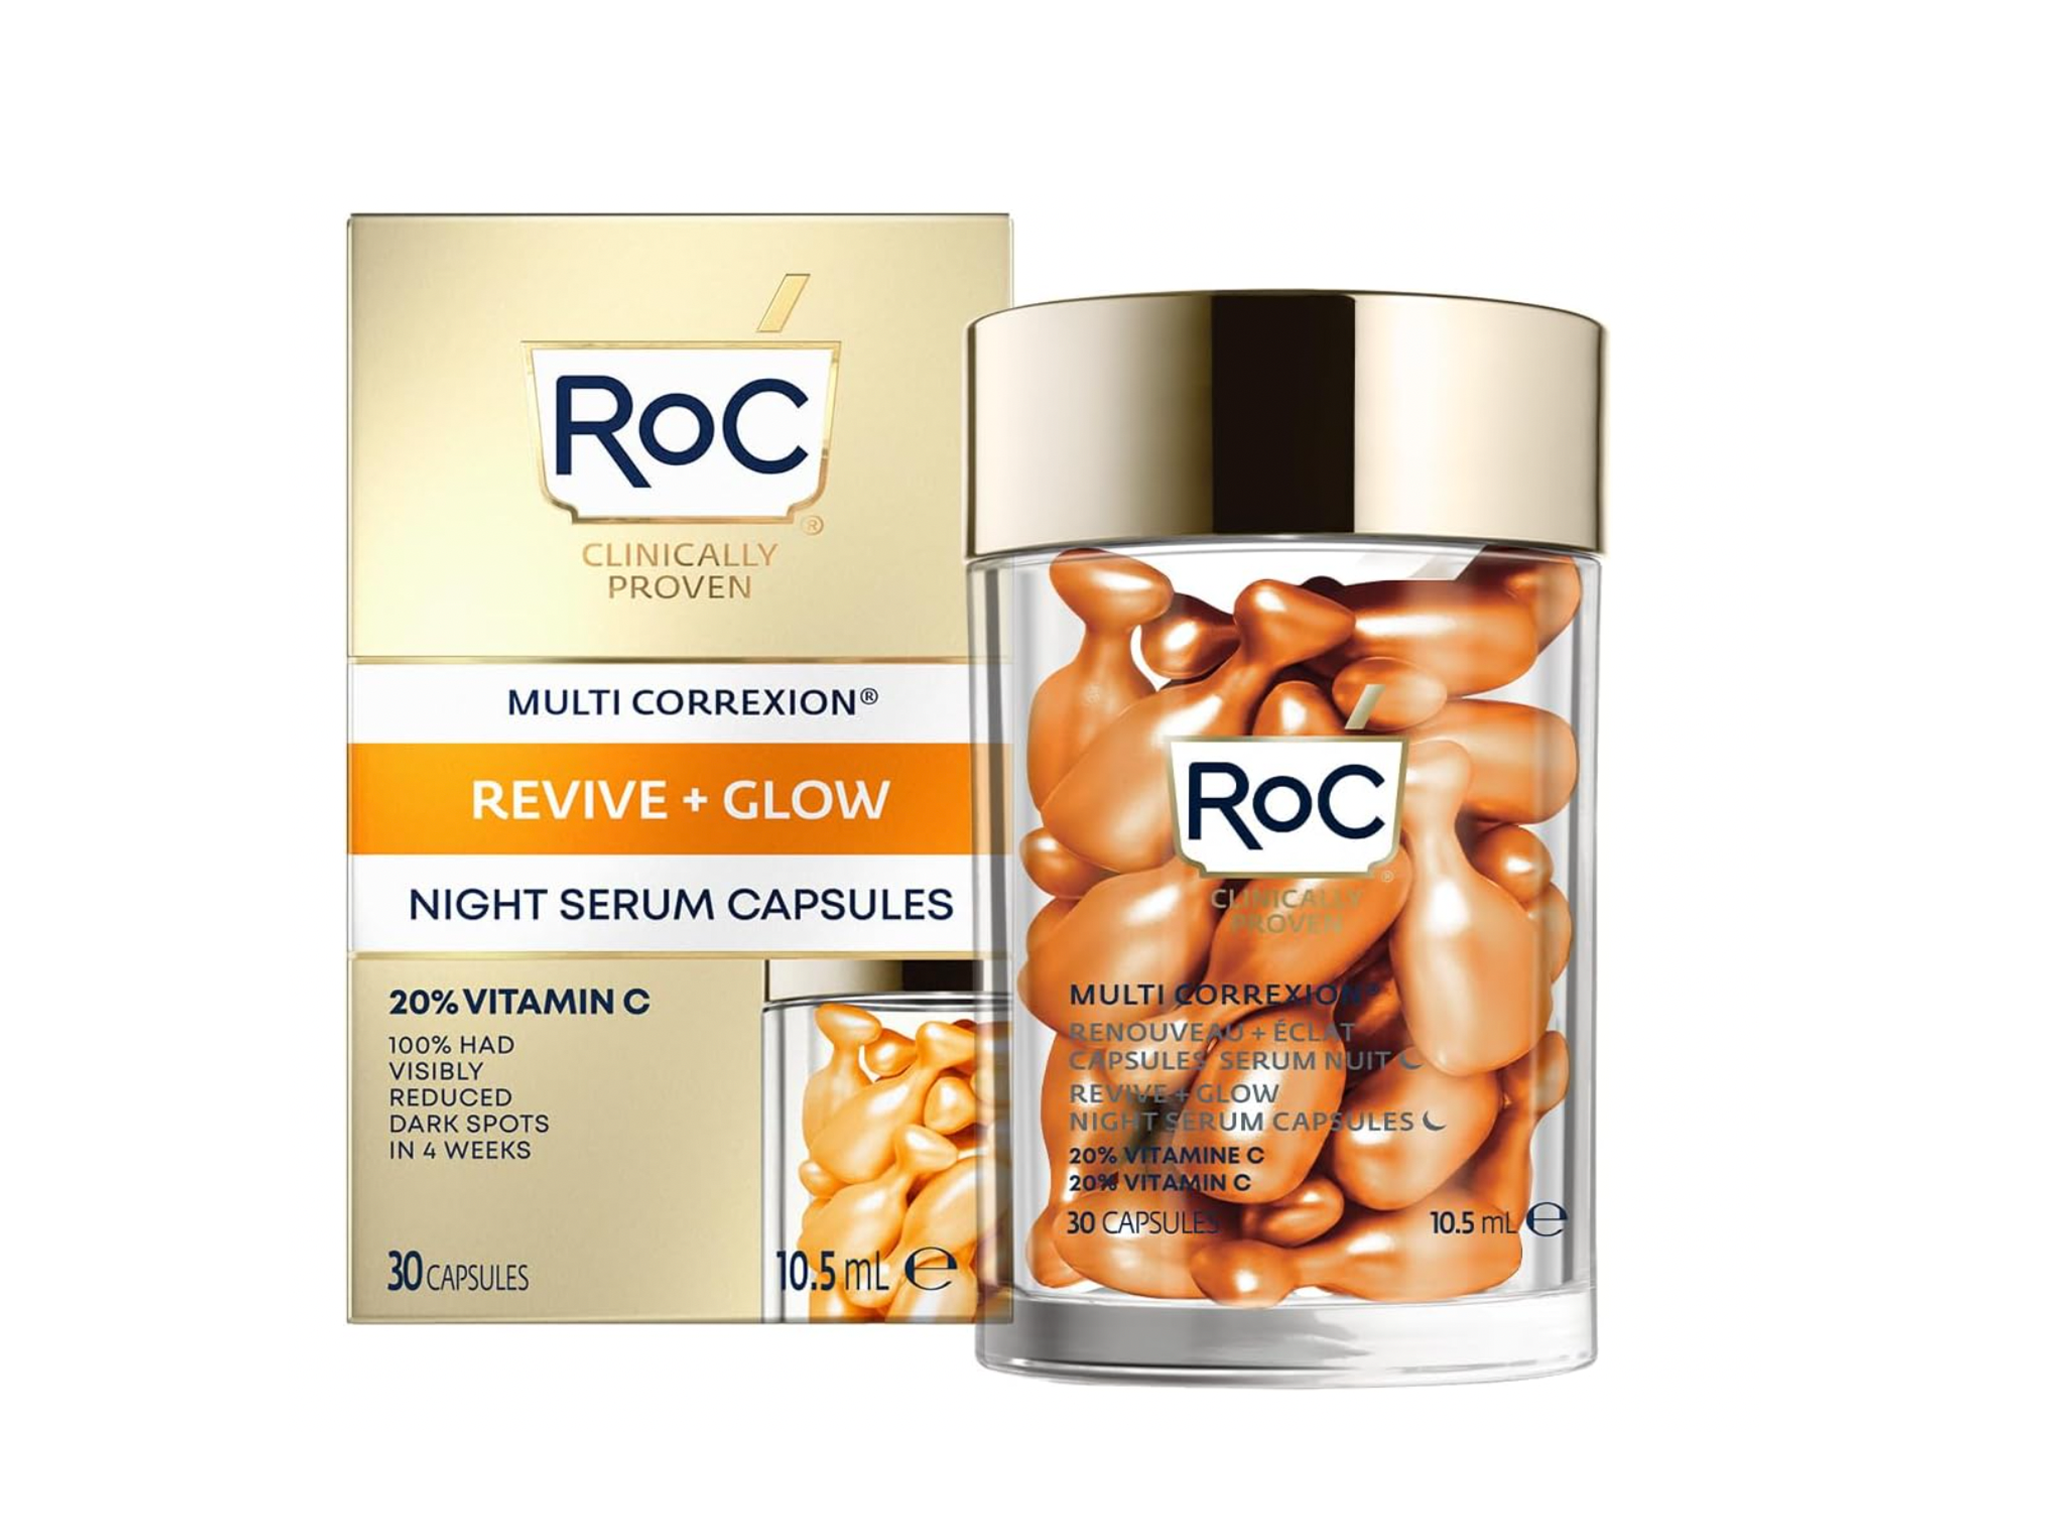 RoC multi correxion revive and glow capsules